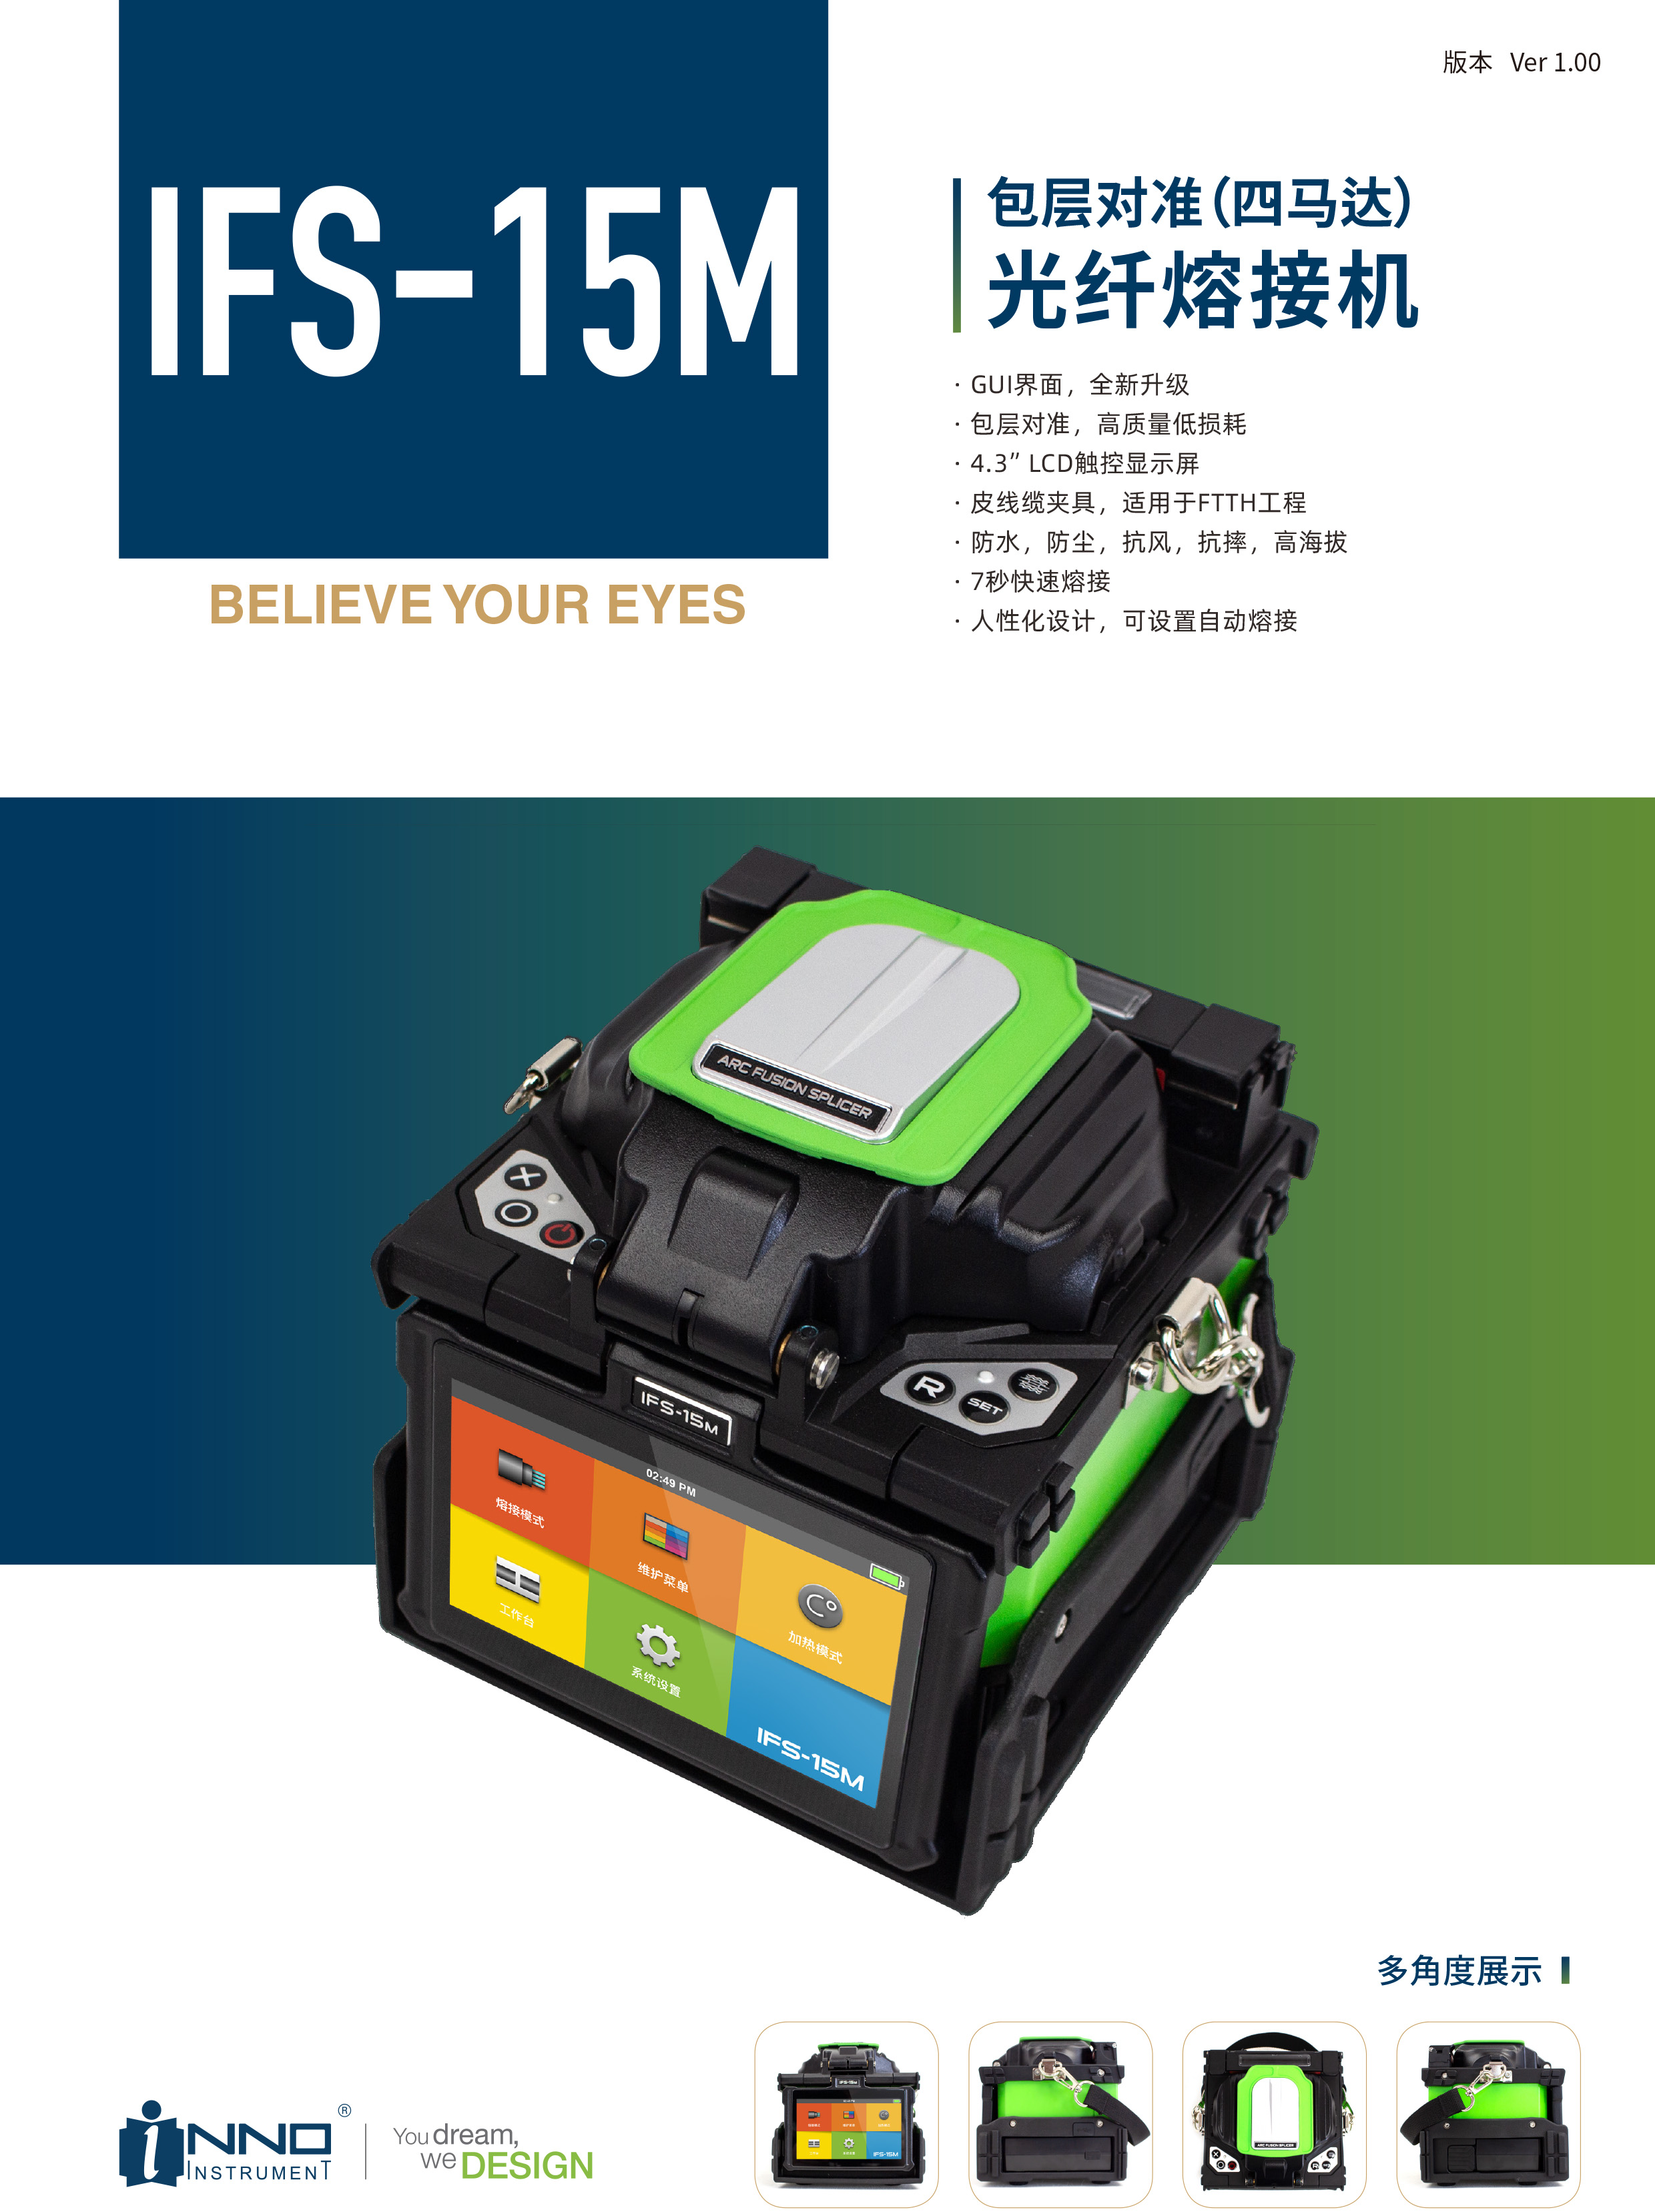 IFS-15M_Catalog ver1.0(1)-1.jpg